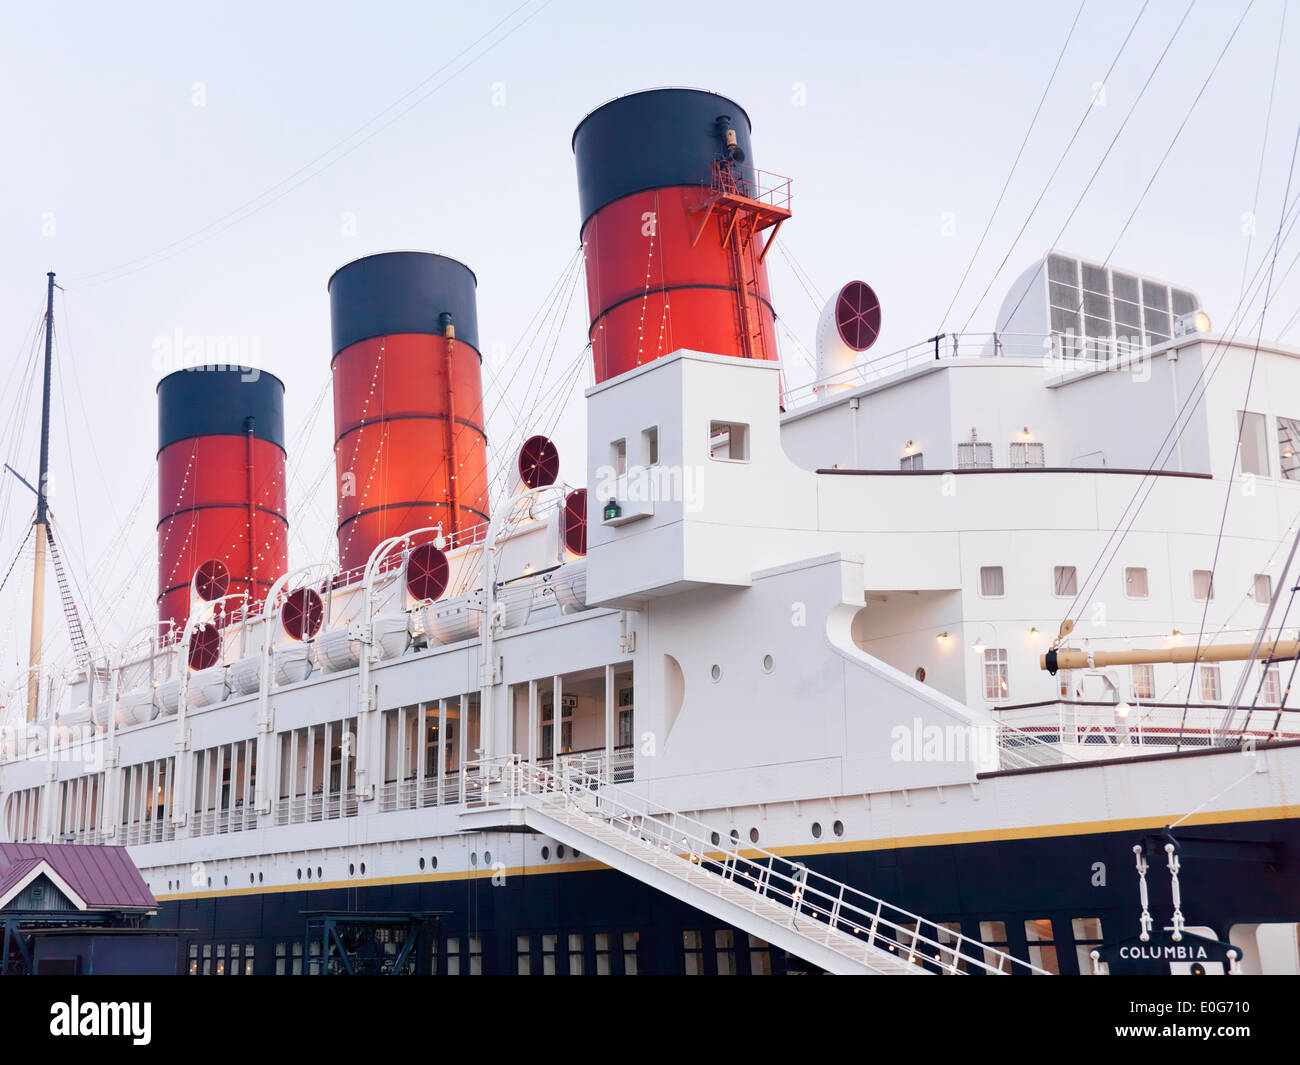 SS Columbia Attraktion, Passagierschiff Schiff Dampf an American Waterfront, Tokyo Disneysea. Japan. Stockfoto